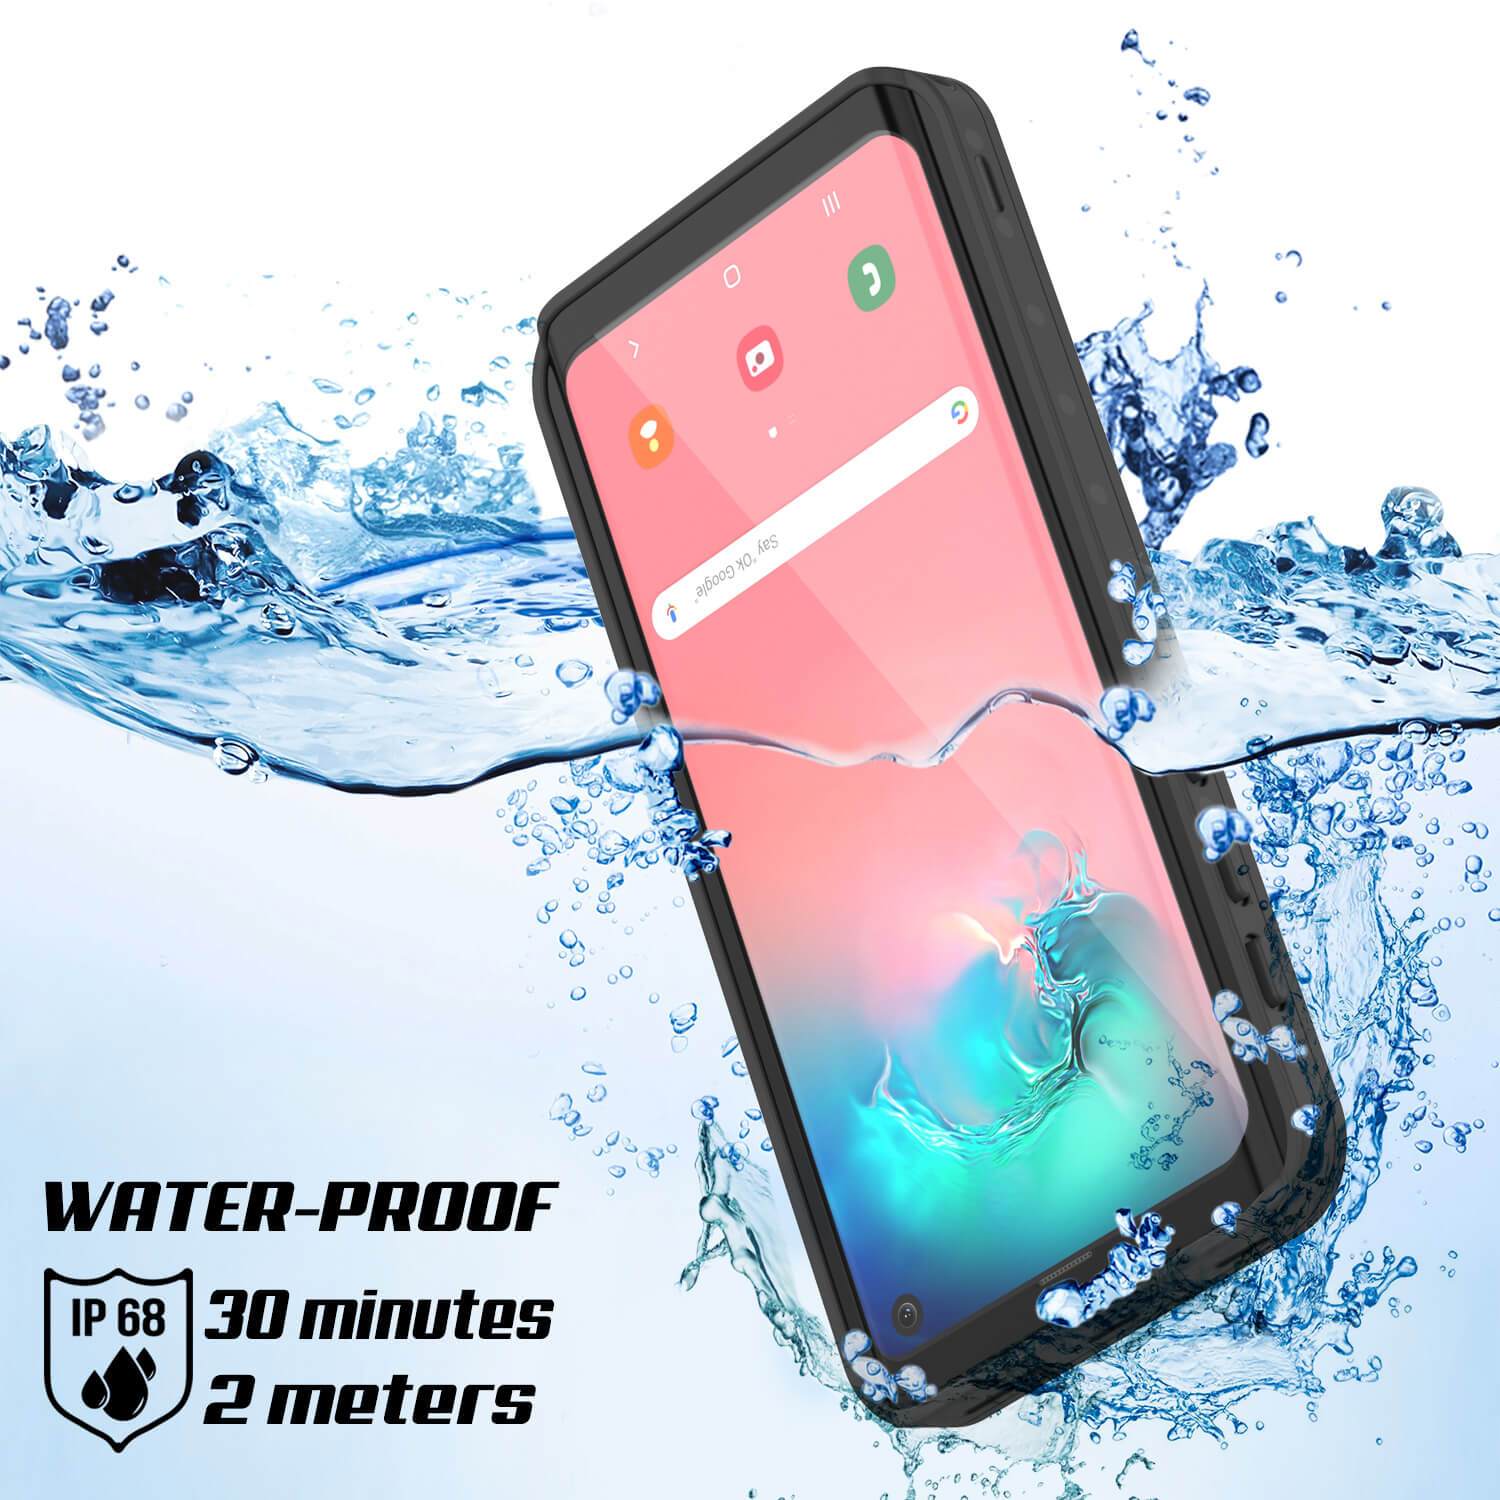 Galaxy S10 Waterproof Case PunkCase StudStar Clear Thin 6.6ft Underwater IP68 Shock/Snow Proof